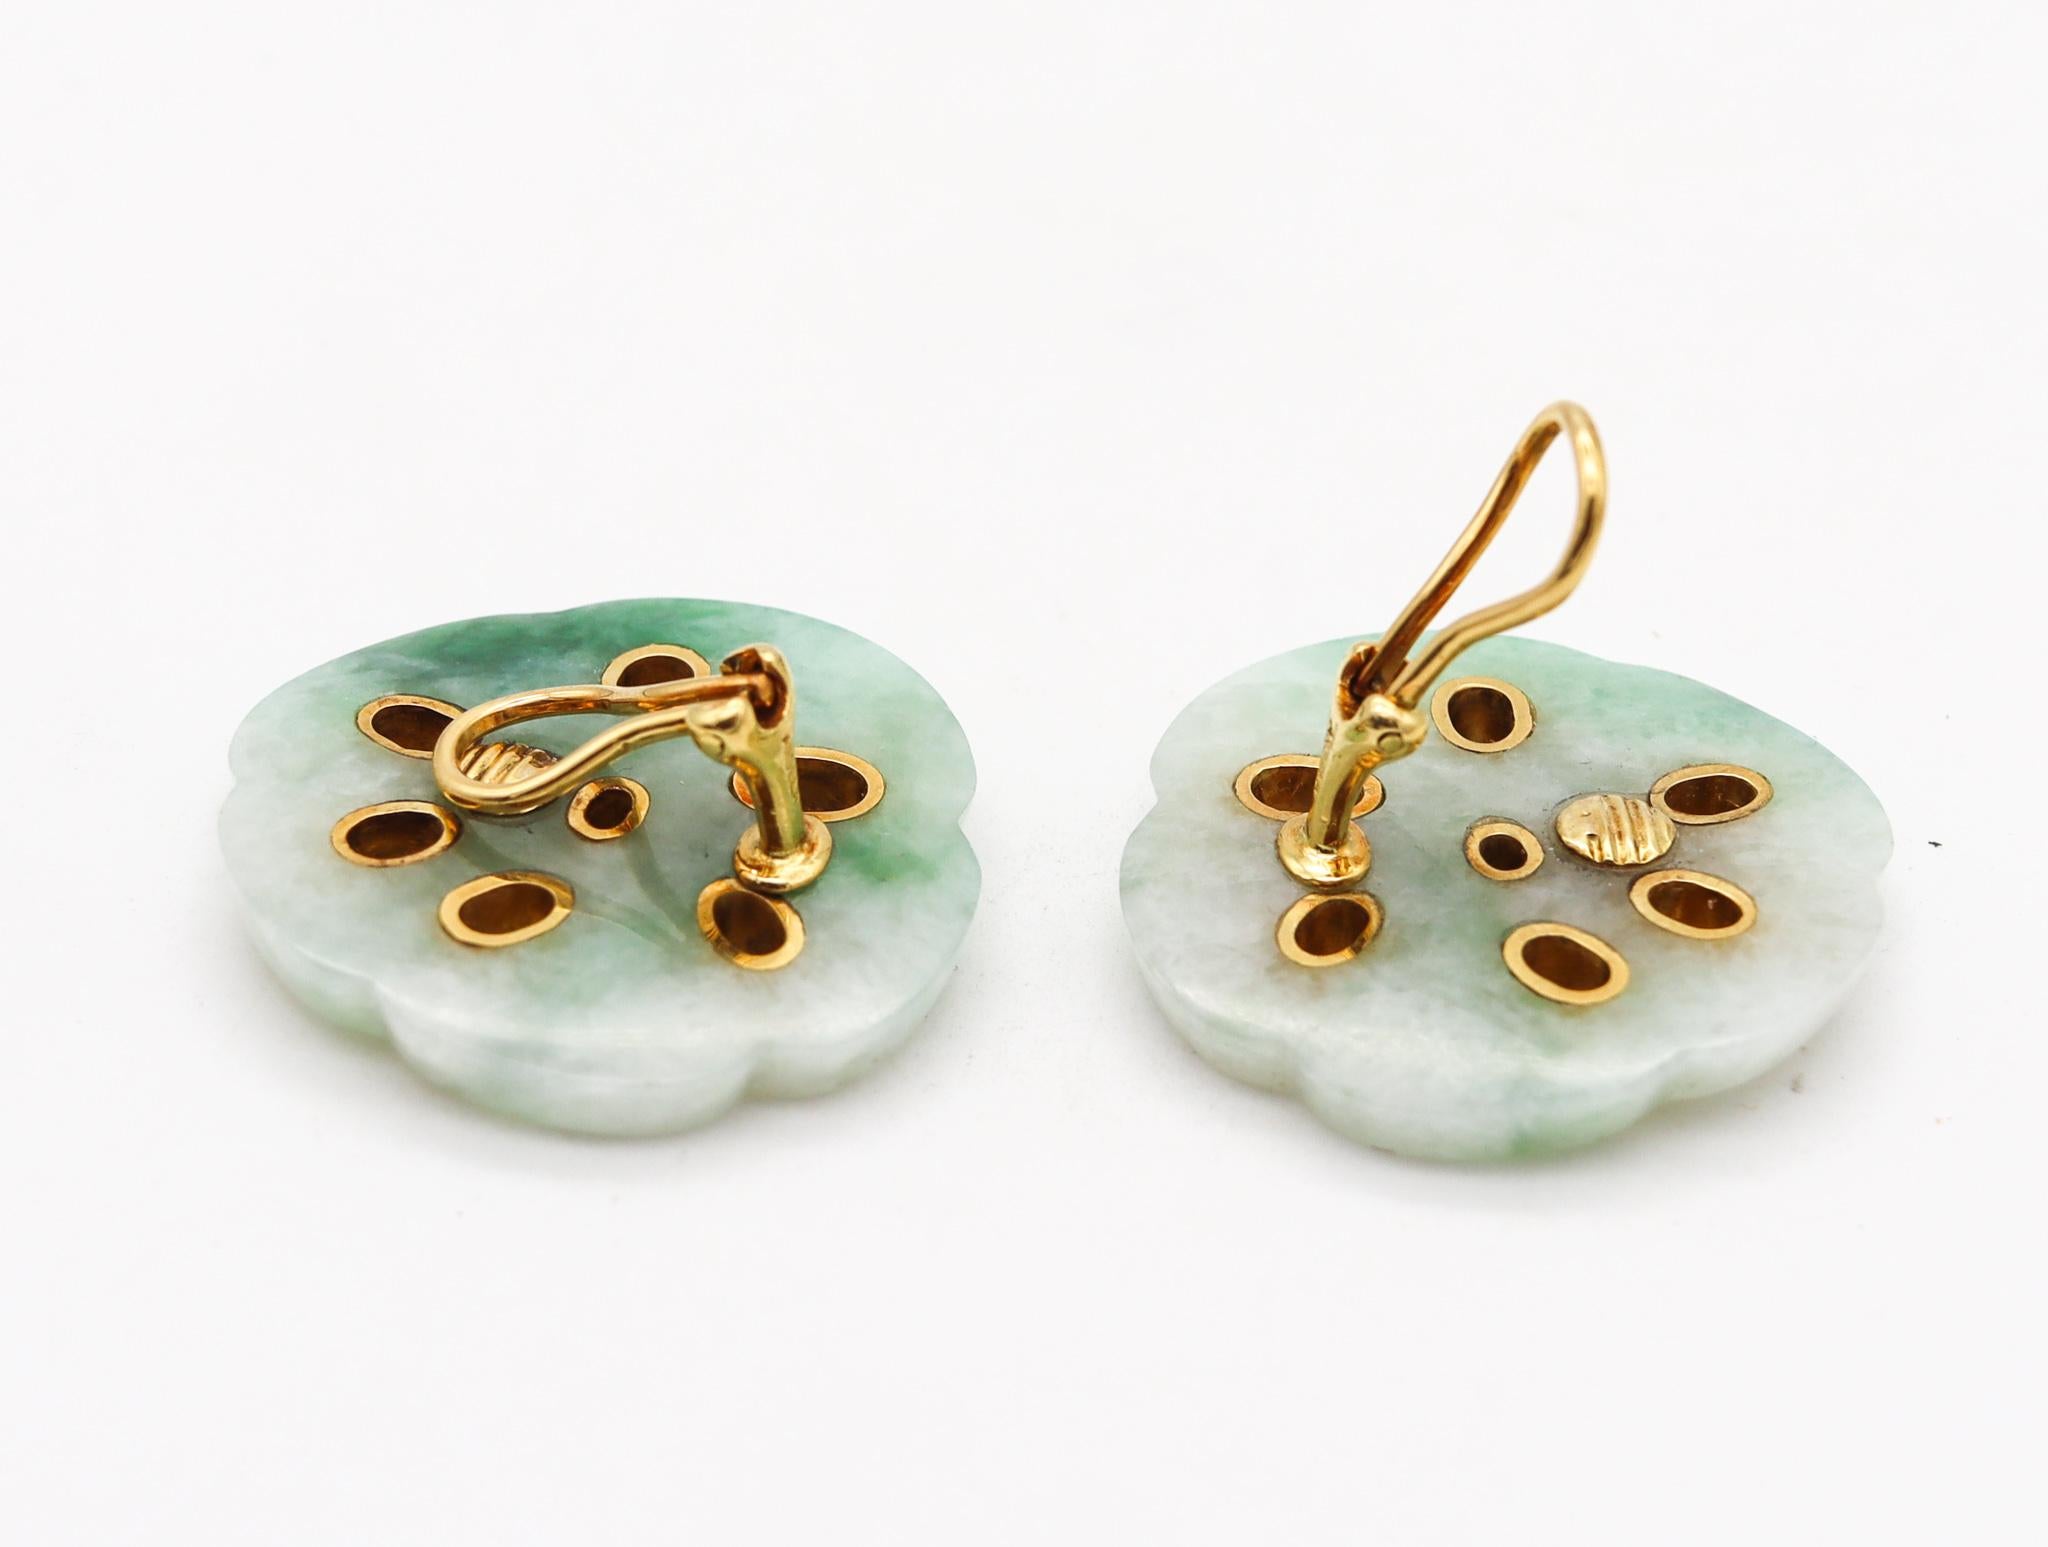 Modernist Angela Cummings Studios 1983 Lotus Clip Earrings in 18Kt Gold with Nephrite Jade For Sale